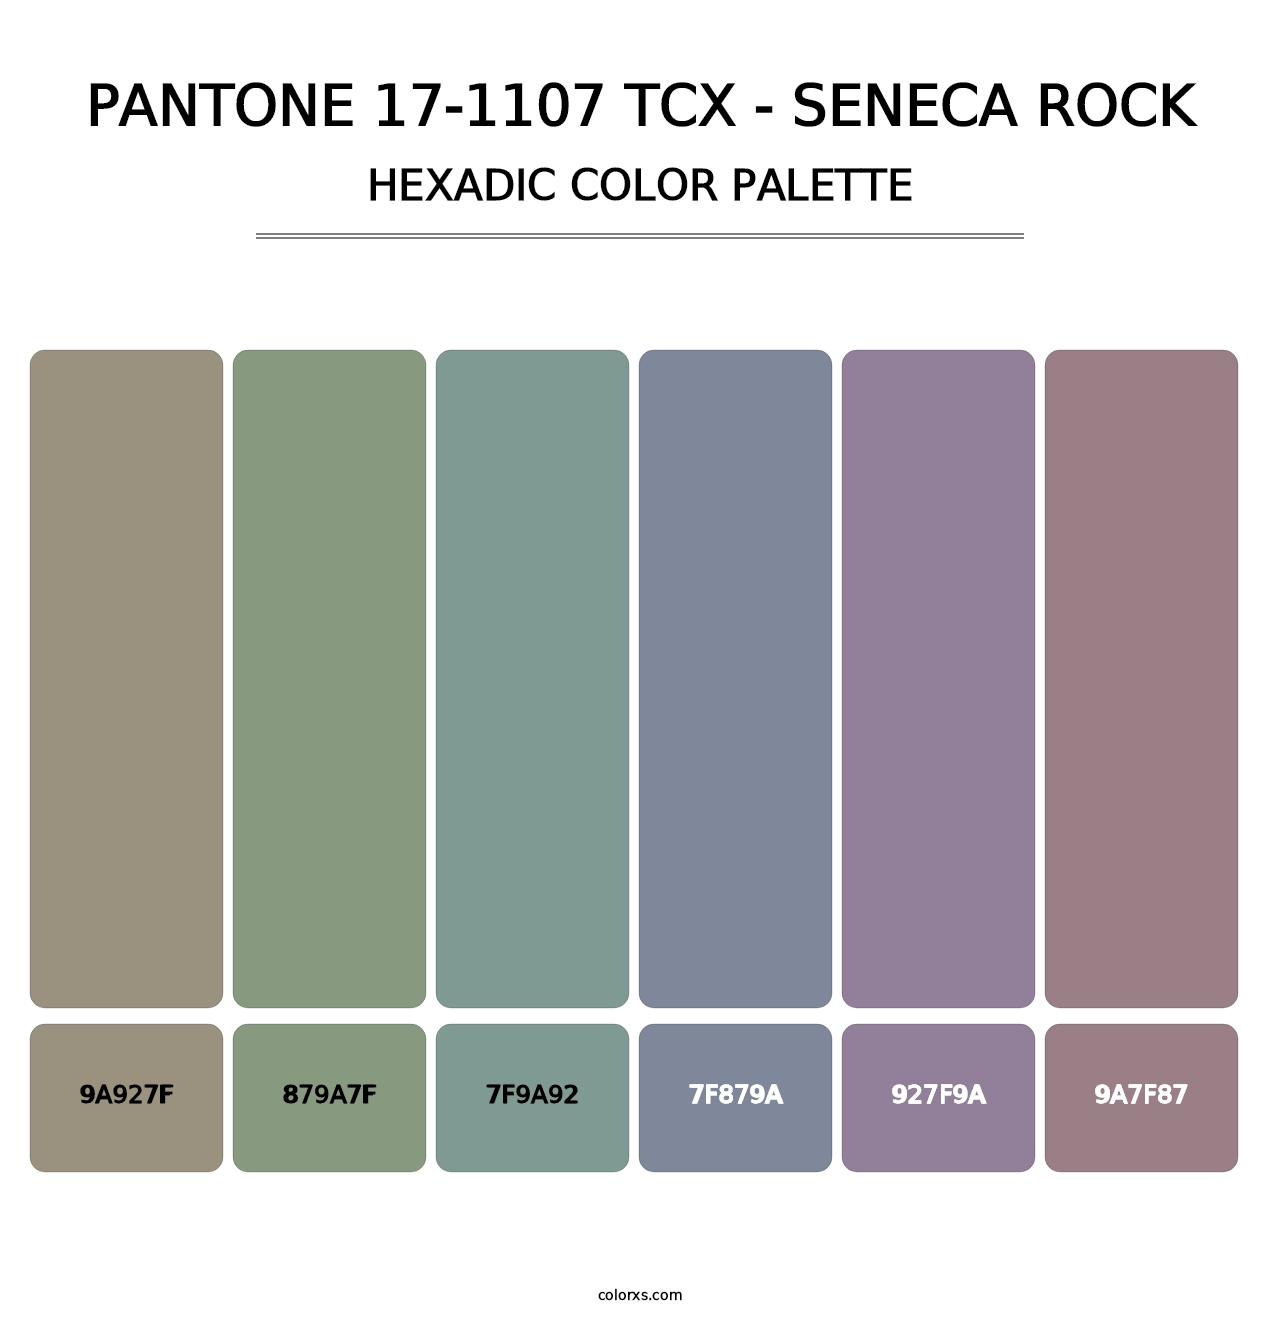 PANTONE 17-1107 TCX - Seneca Rock - Hexadic Color Palette